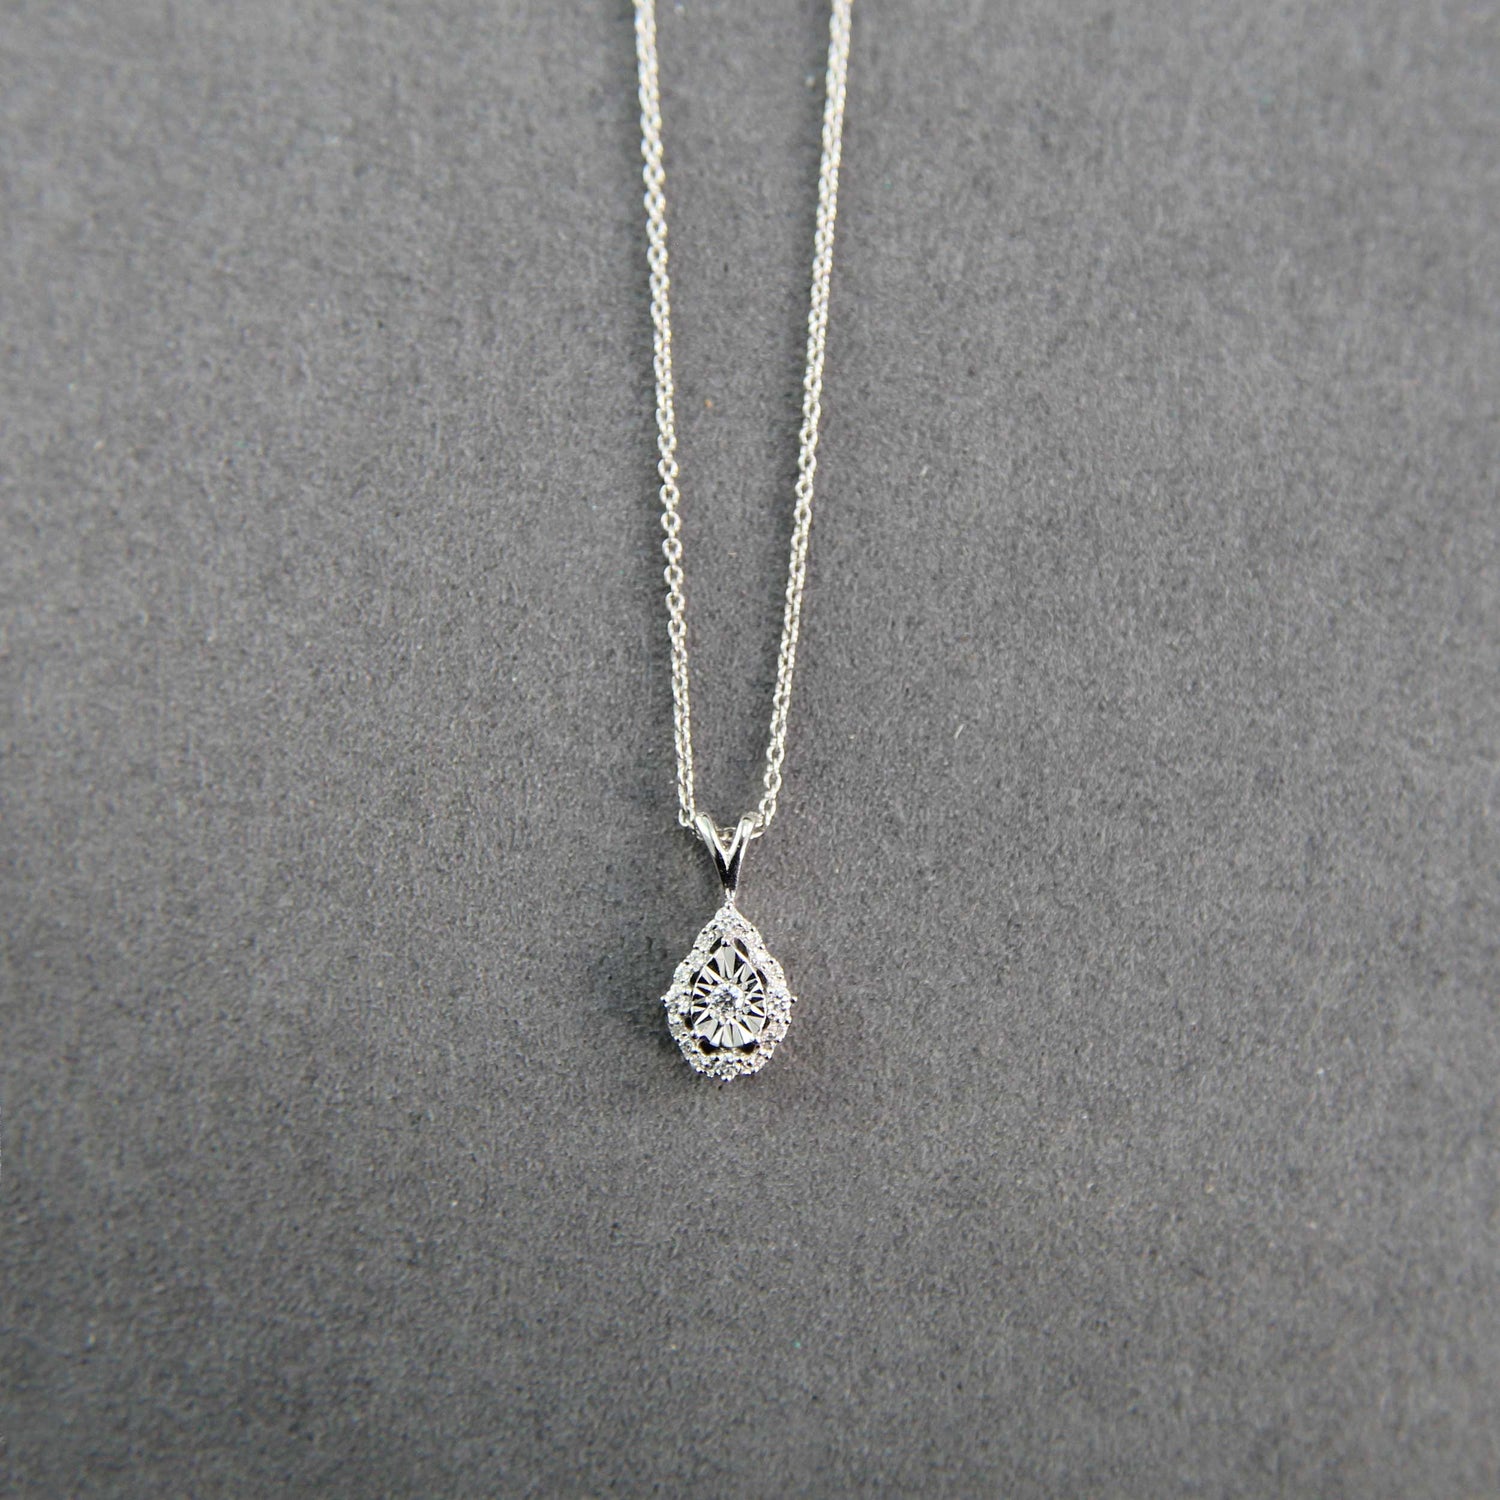 1/10CT TW Diamond Teardrop Pear Cluster Fashion Pendant in Sterling Silver